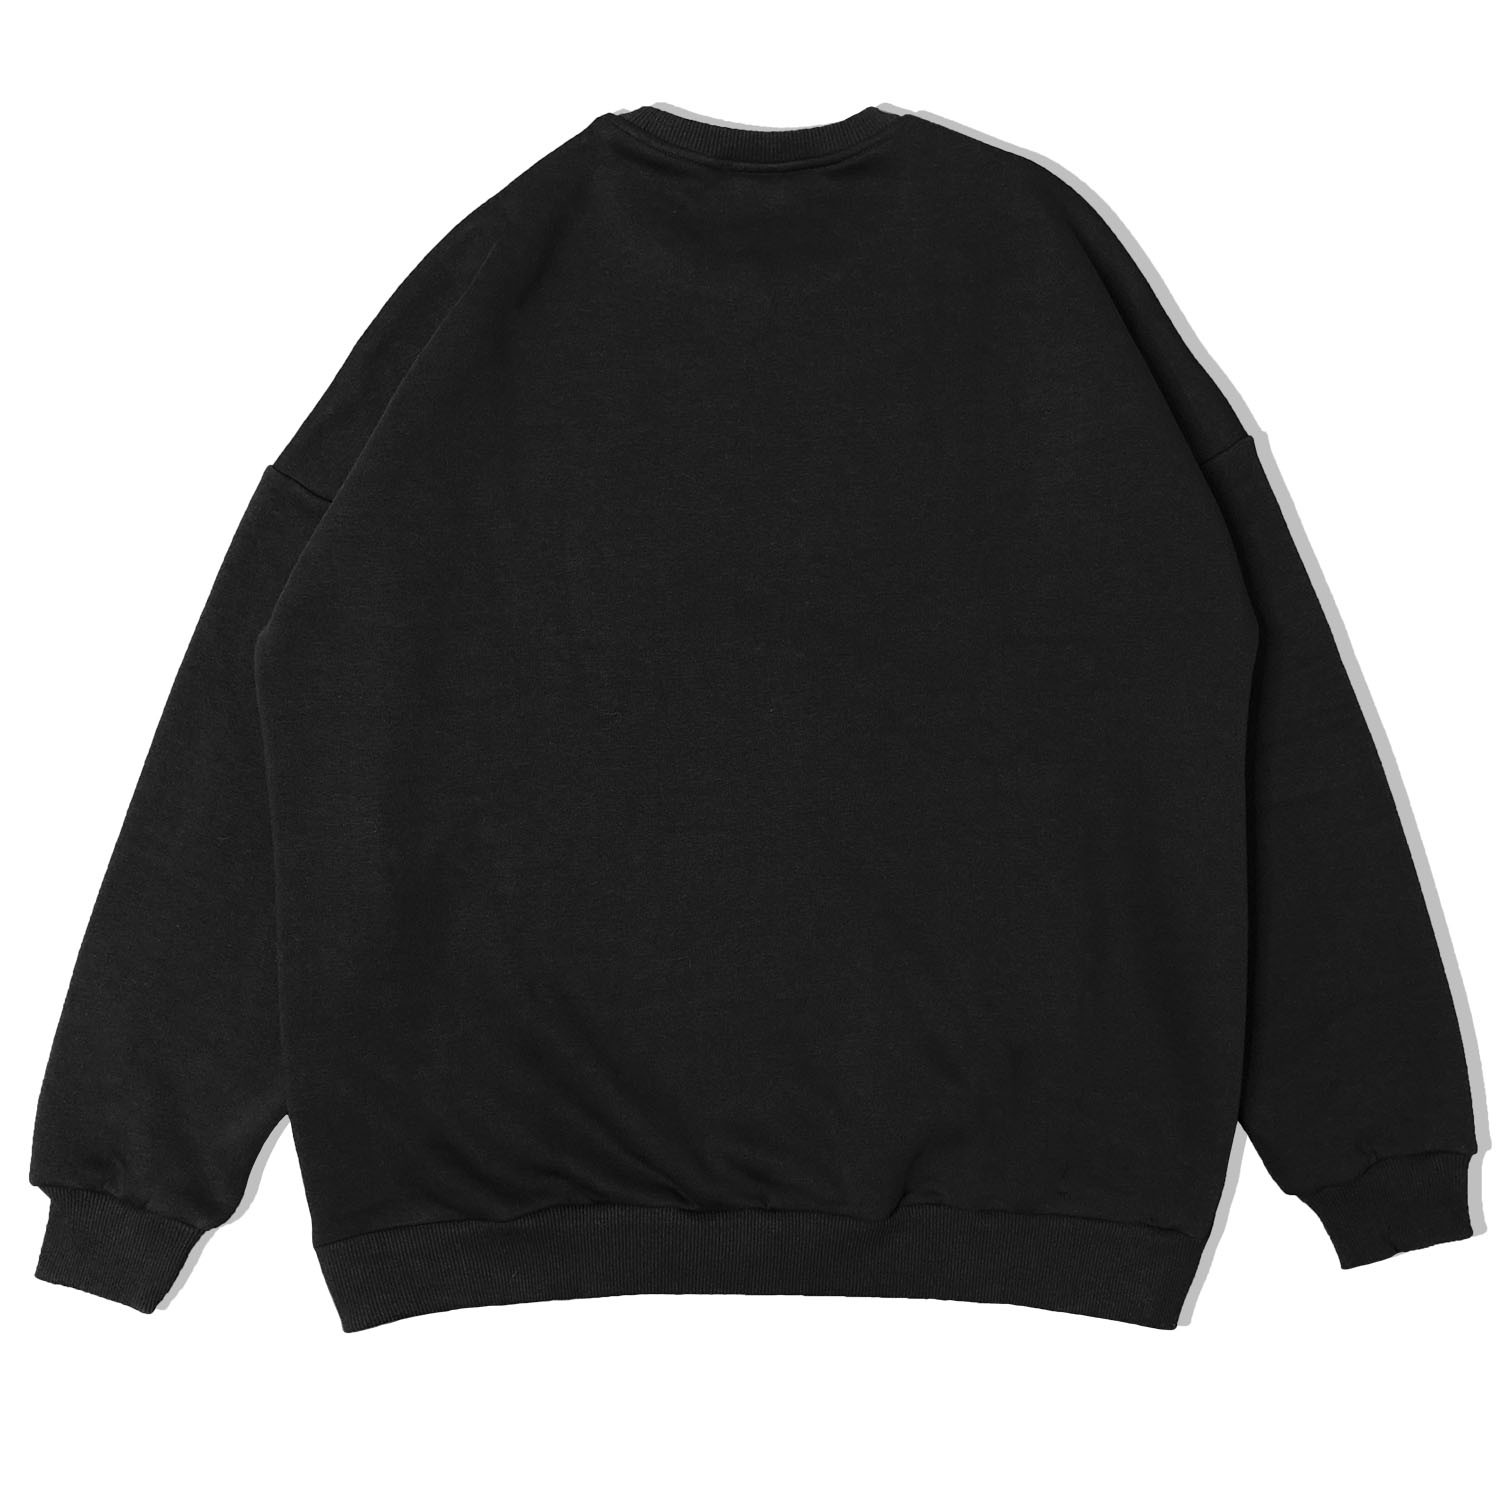 Fire Walk With Me — Oversize Sweatshirt